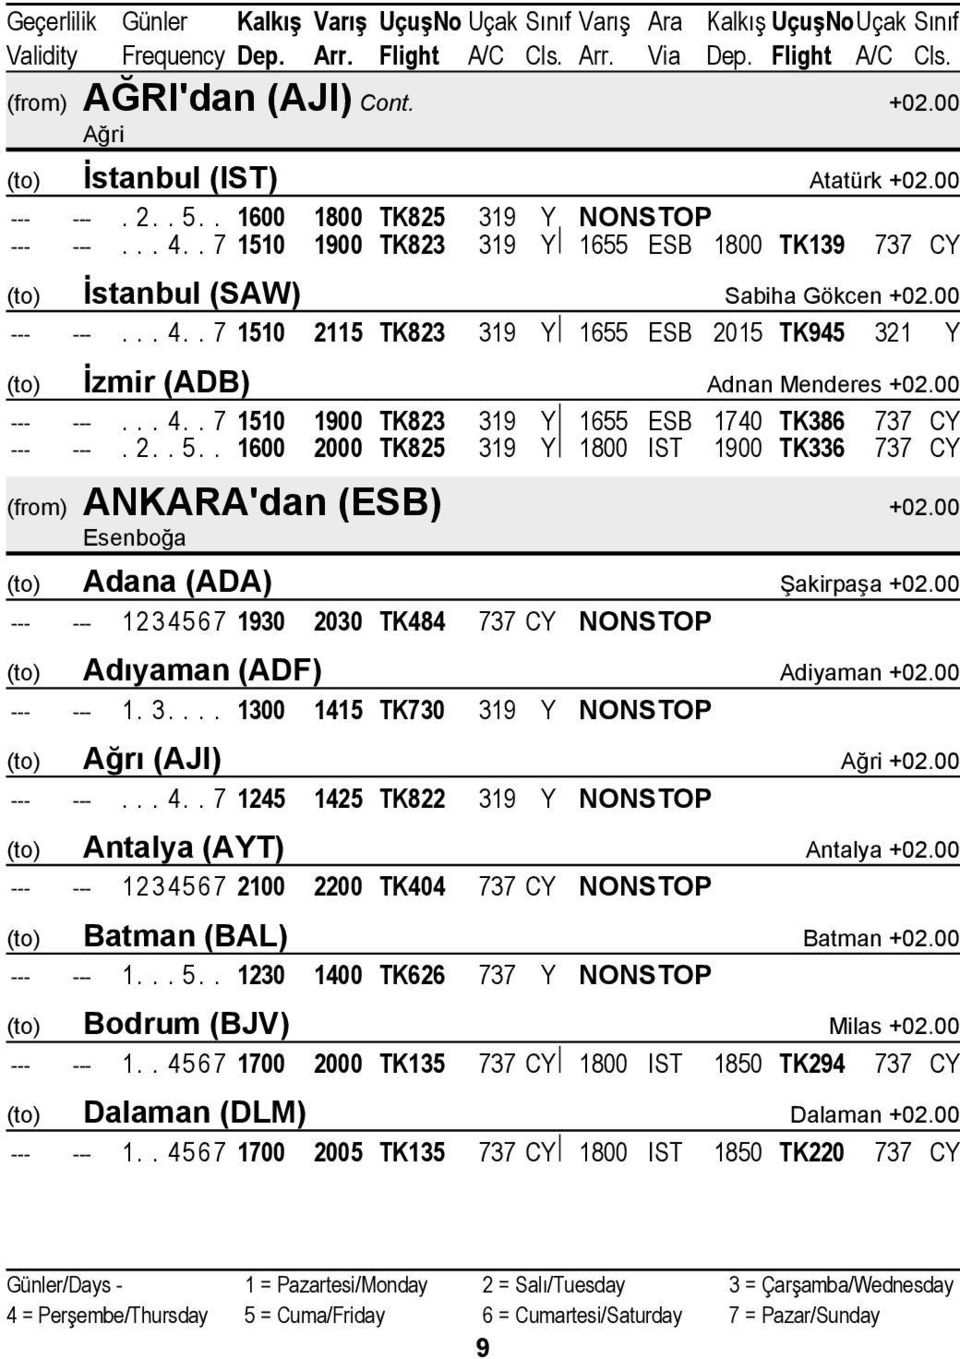 . 1600 2000 TK825 319 Y 1800 IST 1900 TK336 737 CY (from) ANKARA'dan (ESB) +02.00 Esenboğa (to) Adana (ADA) Şakirpaşa +02.